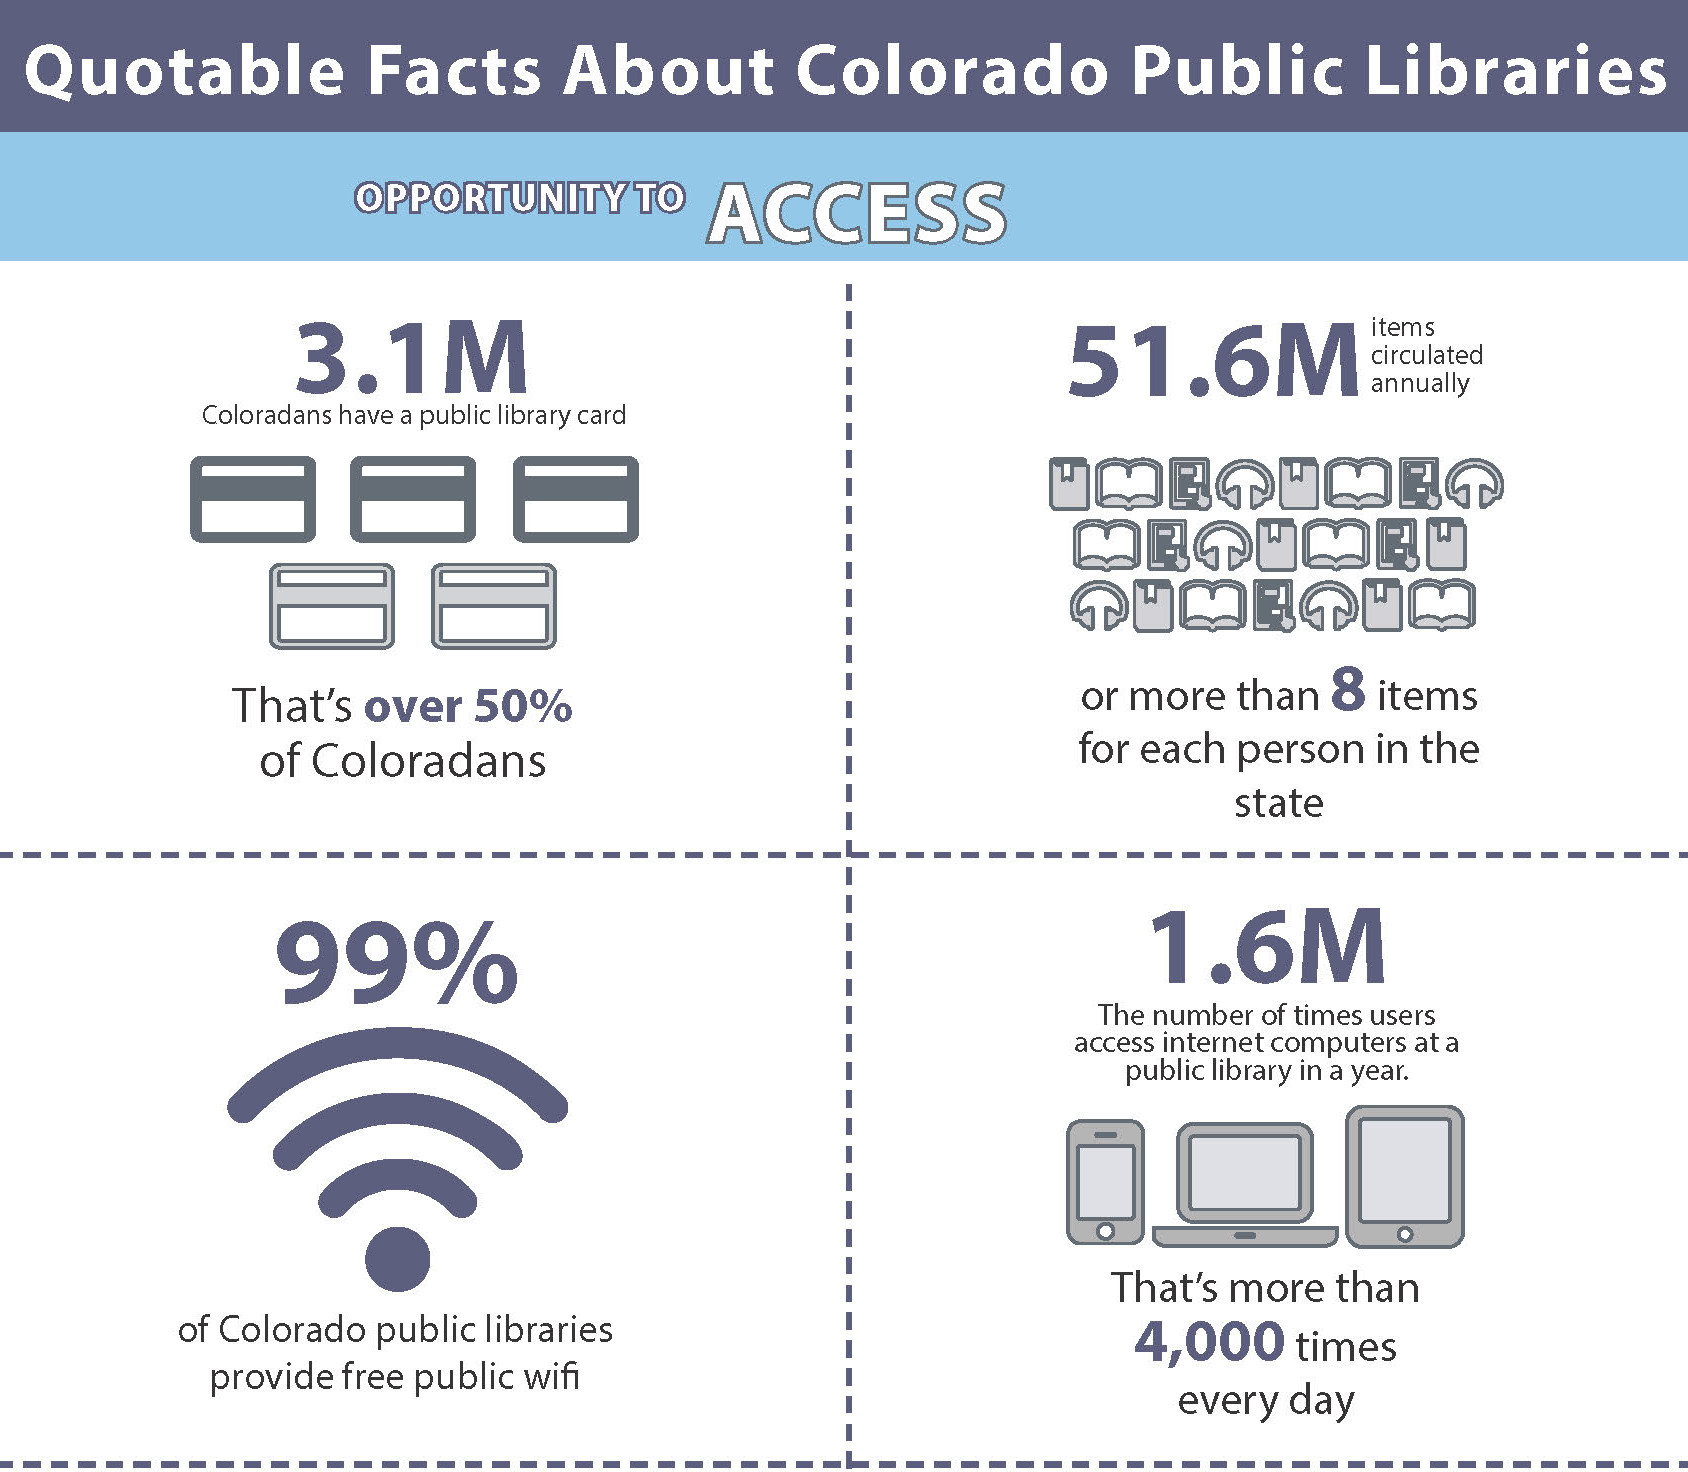 The 2021 Quotable Facts details quick facts about Colorado's public libraries.